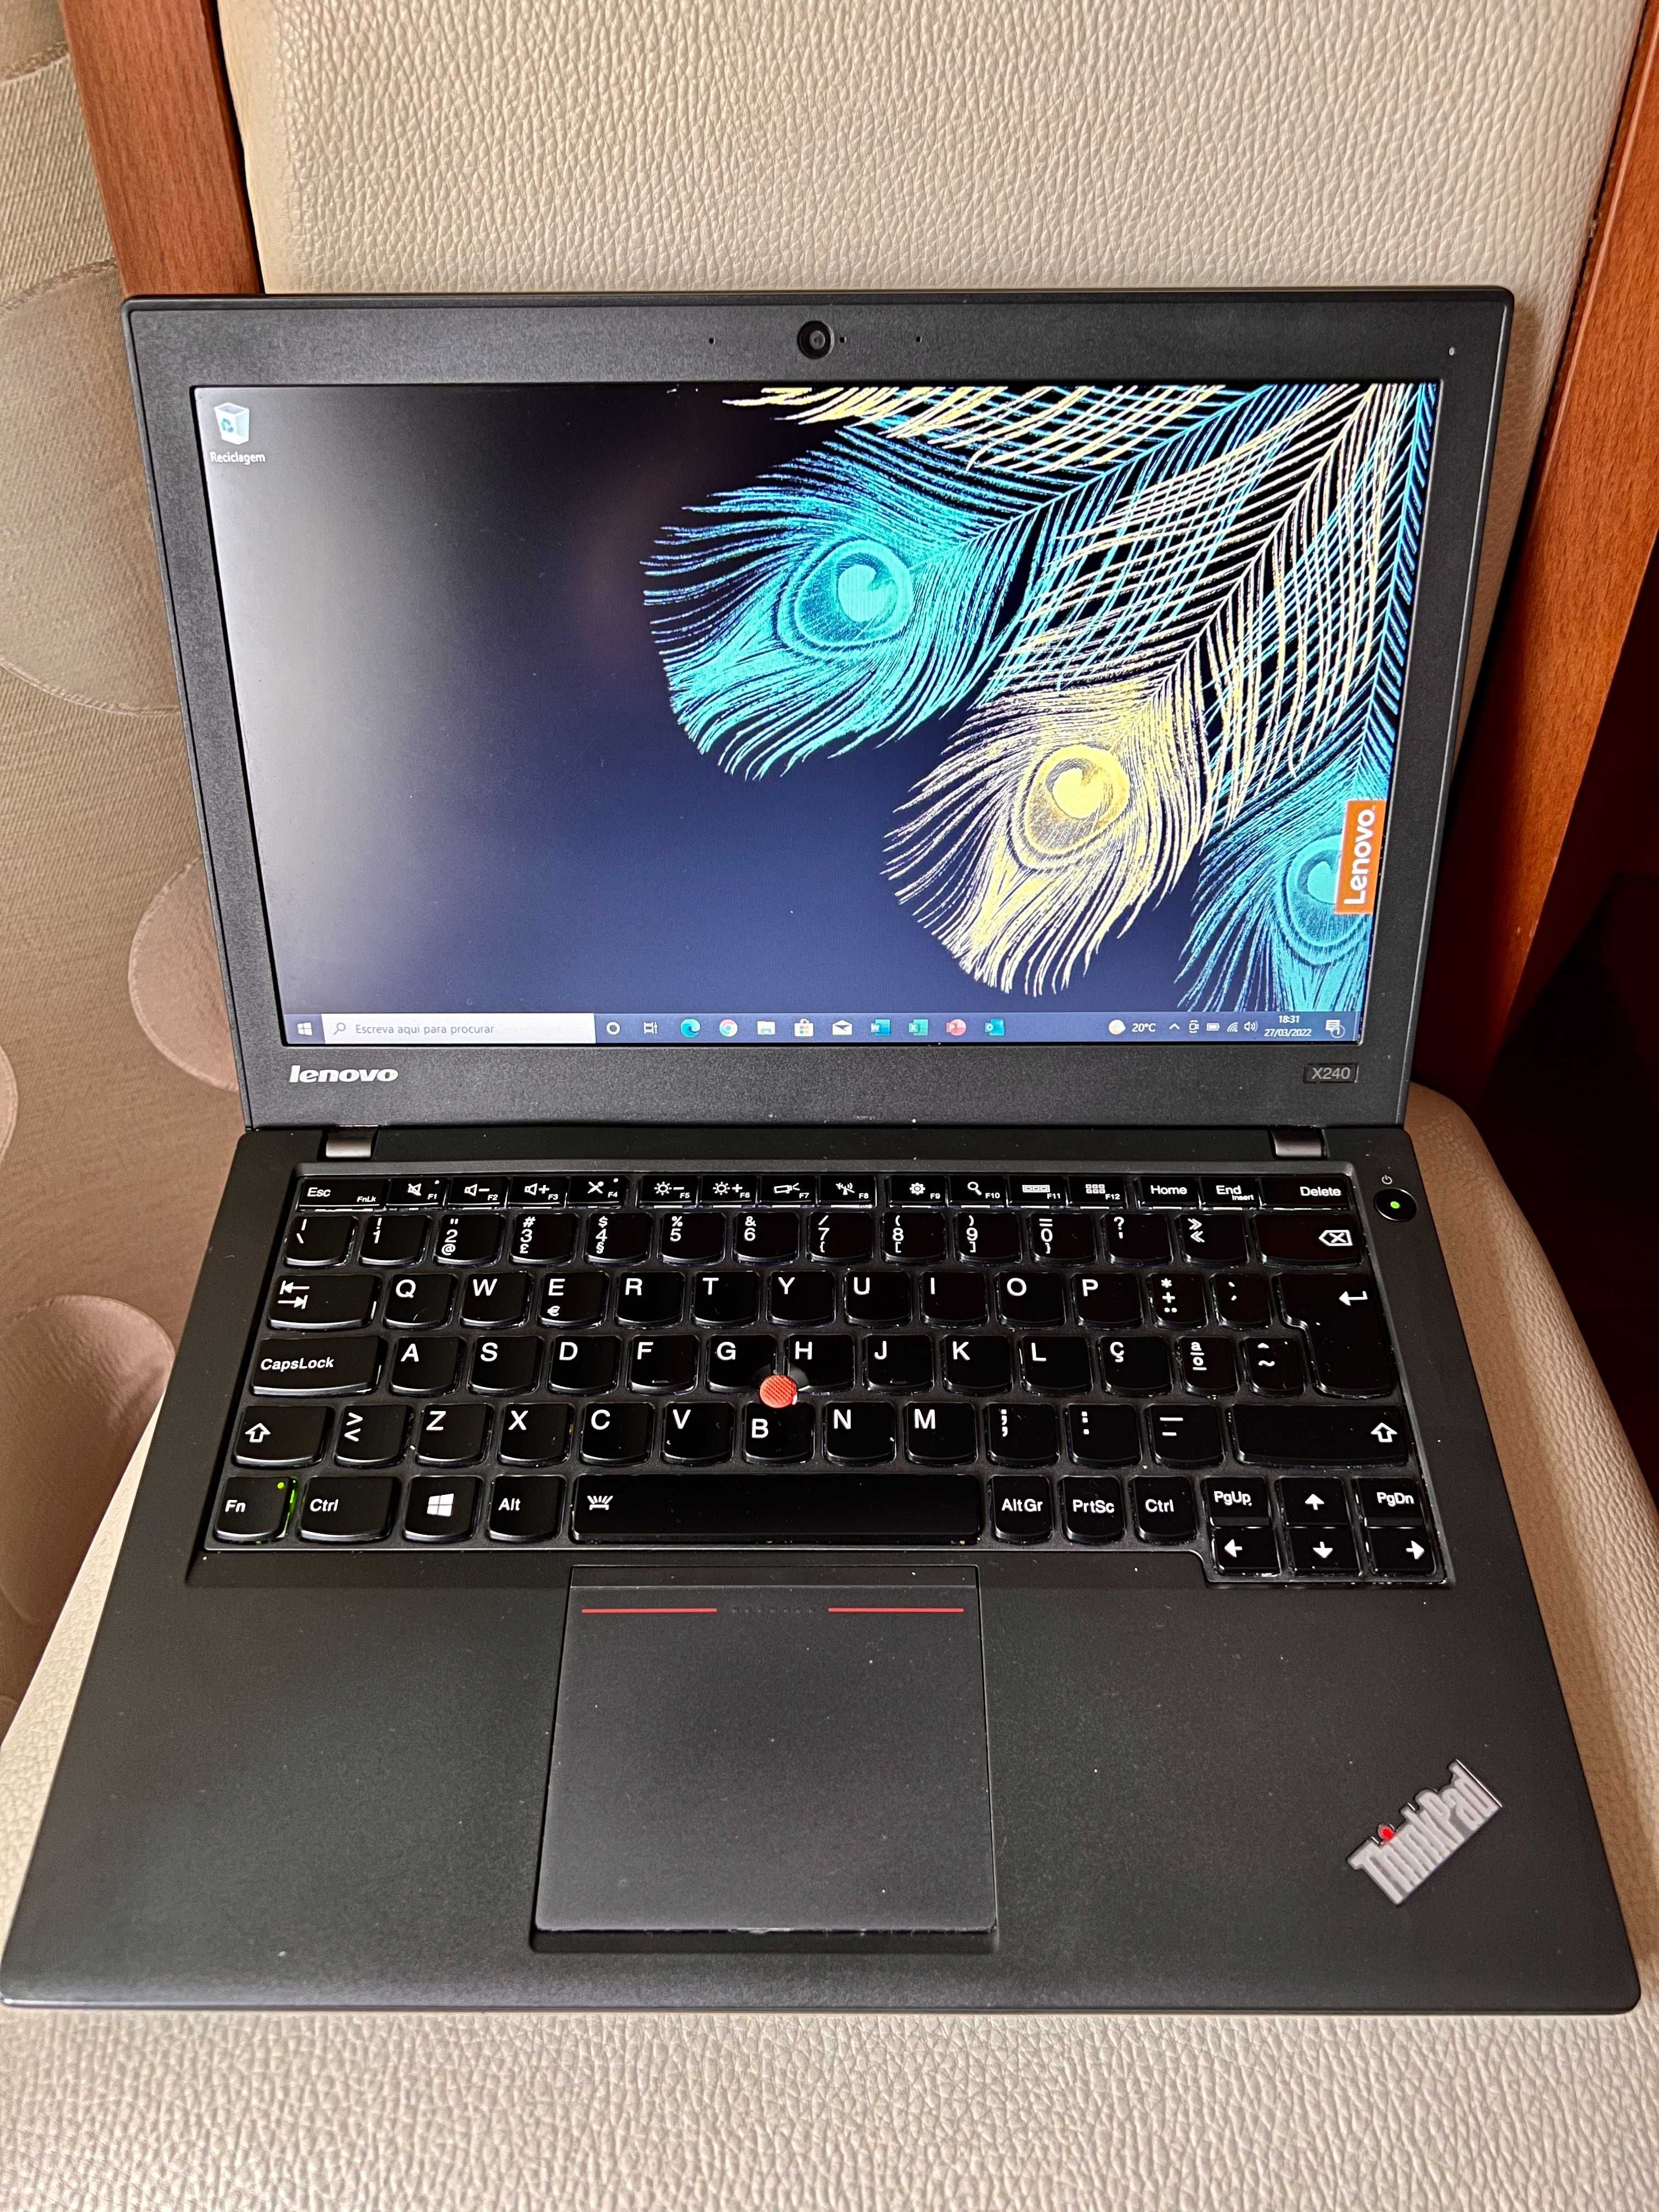 Lenovo ThinkPad X240 13”/i5-4300u/8Gb Ram/Ssd 128Gb